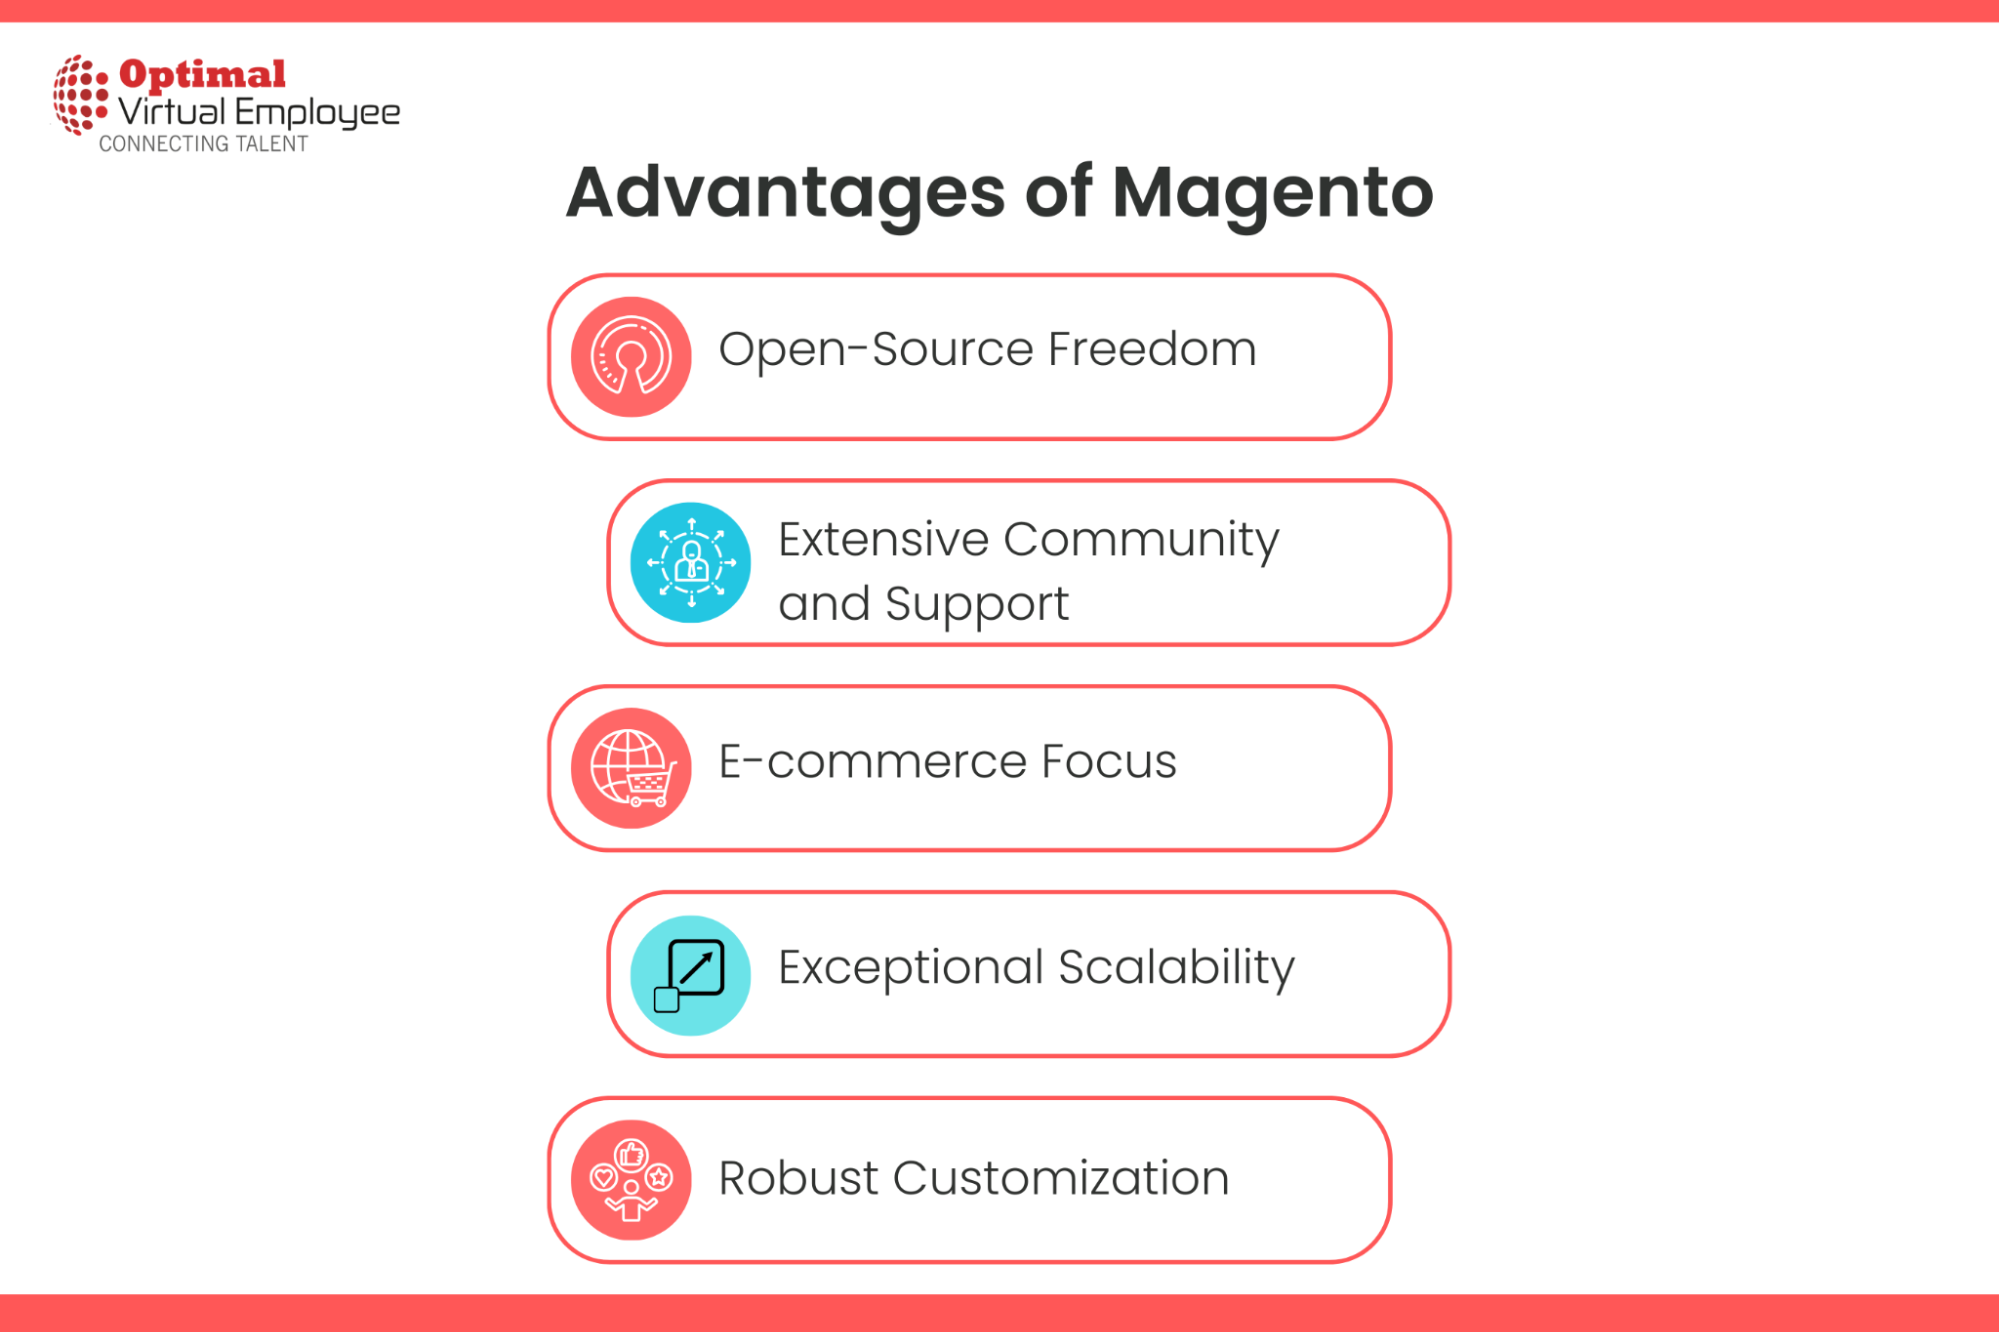 Why use Magento